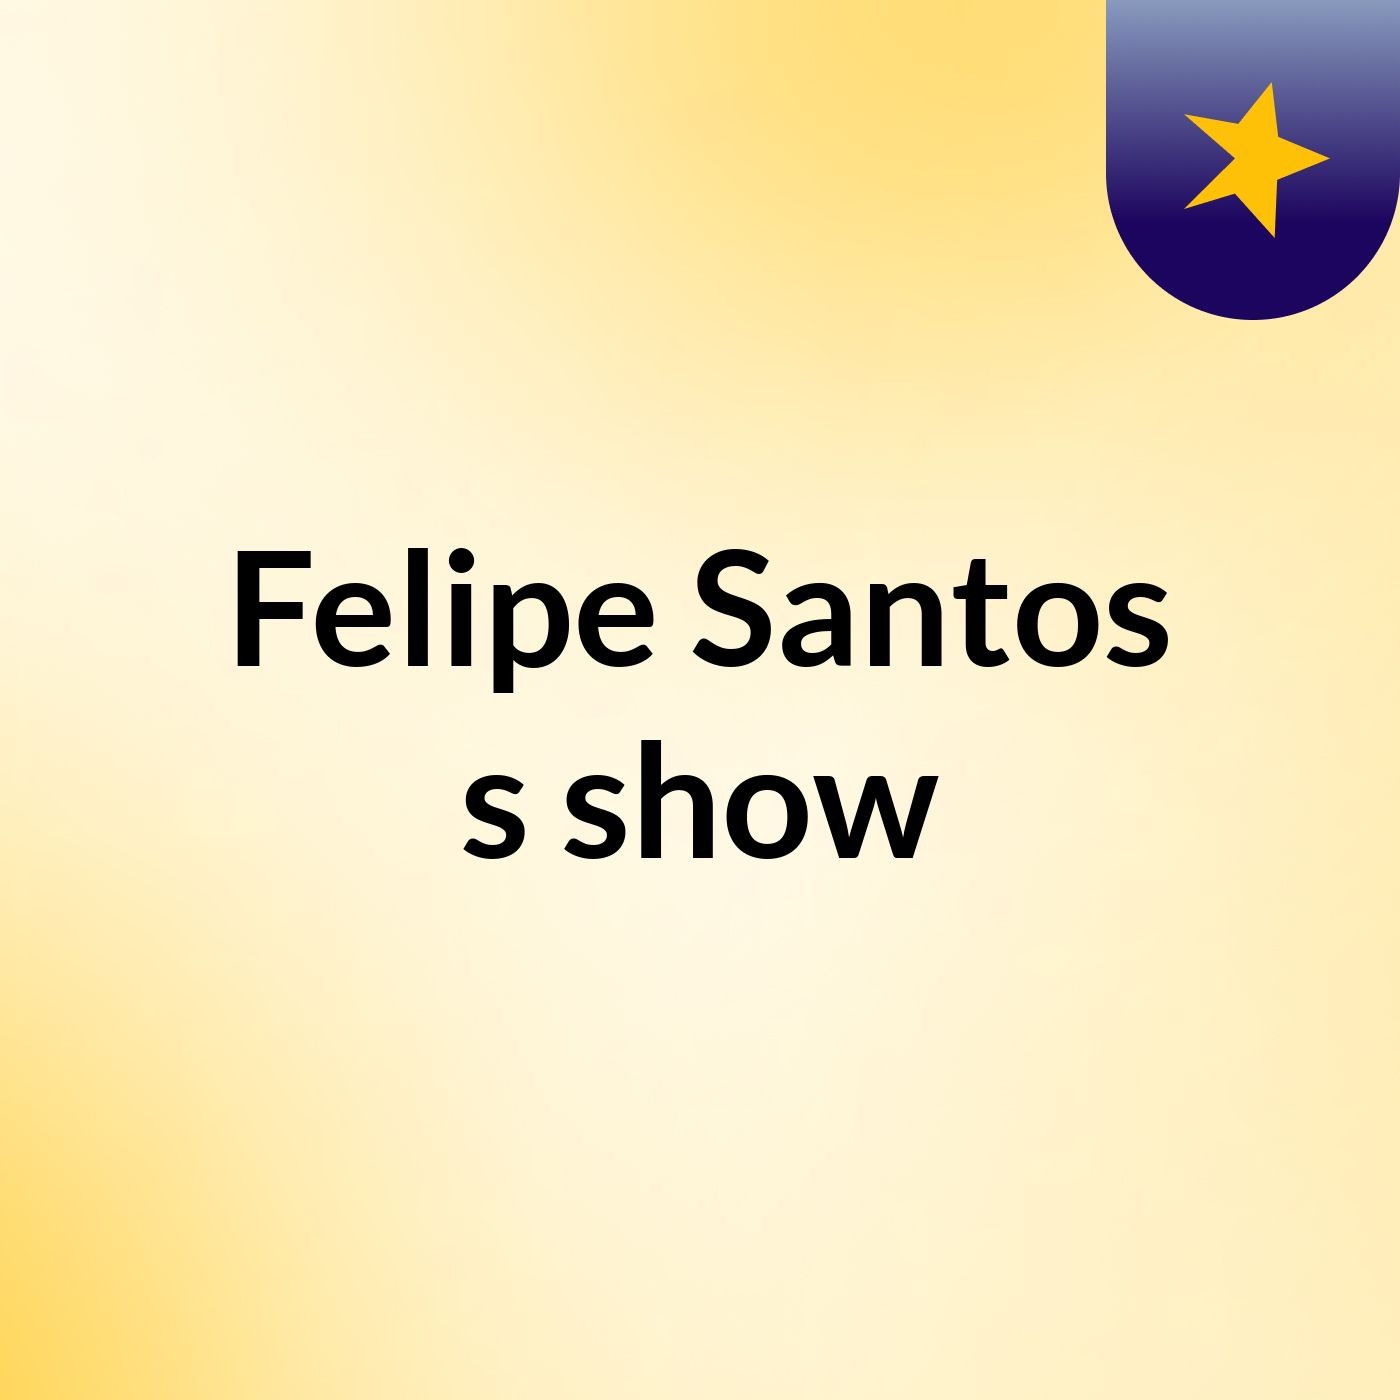 Felipe Santos's show